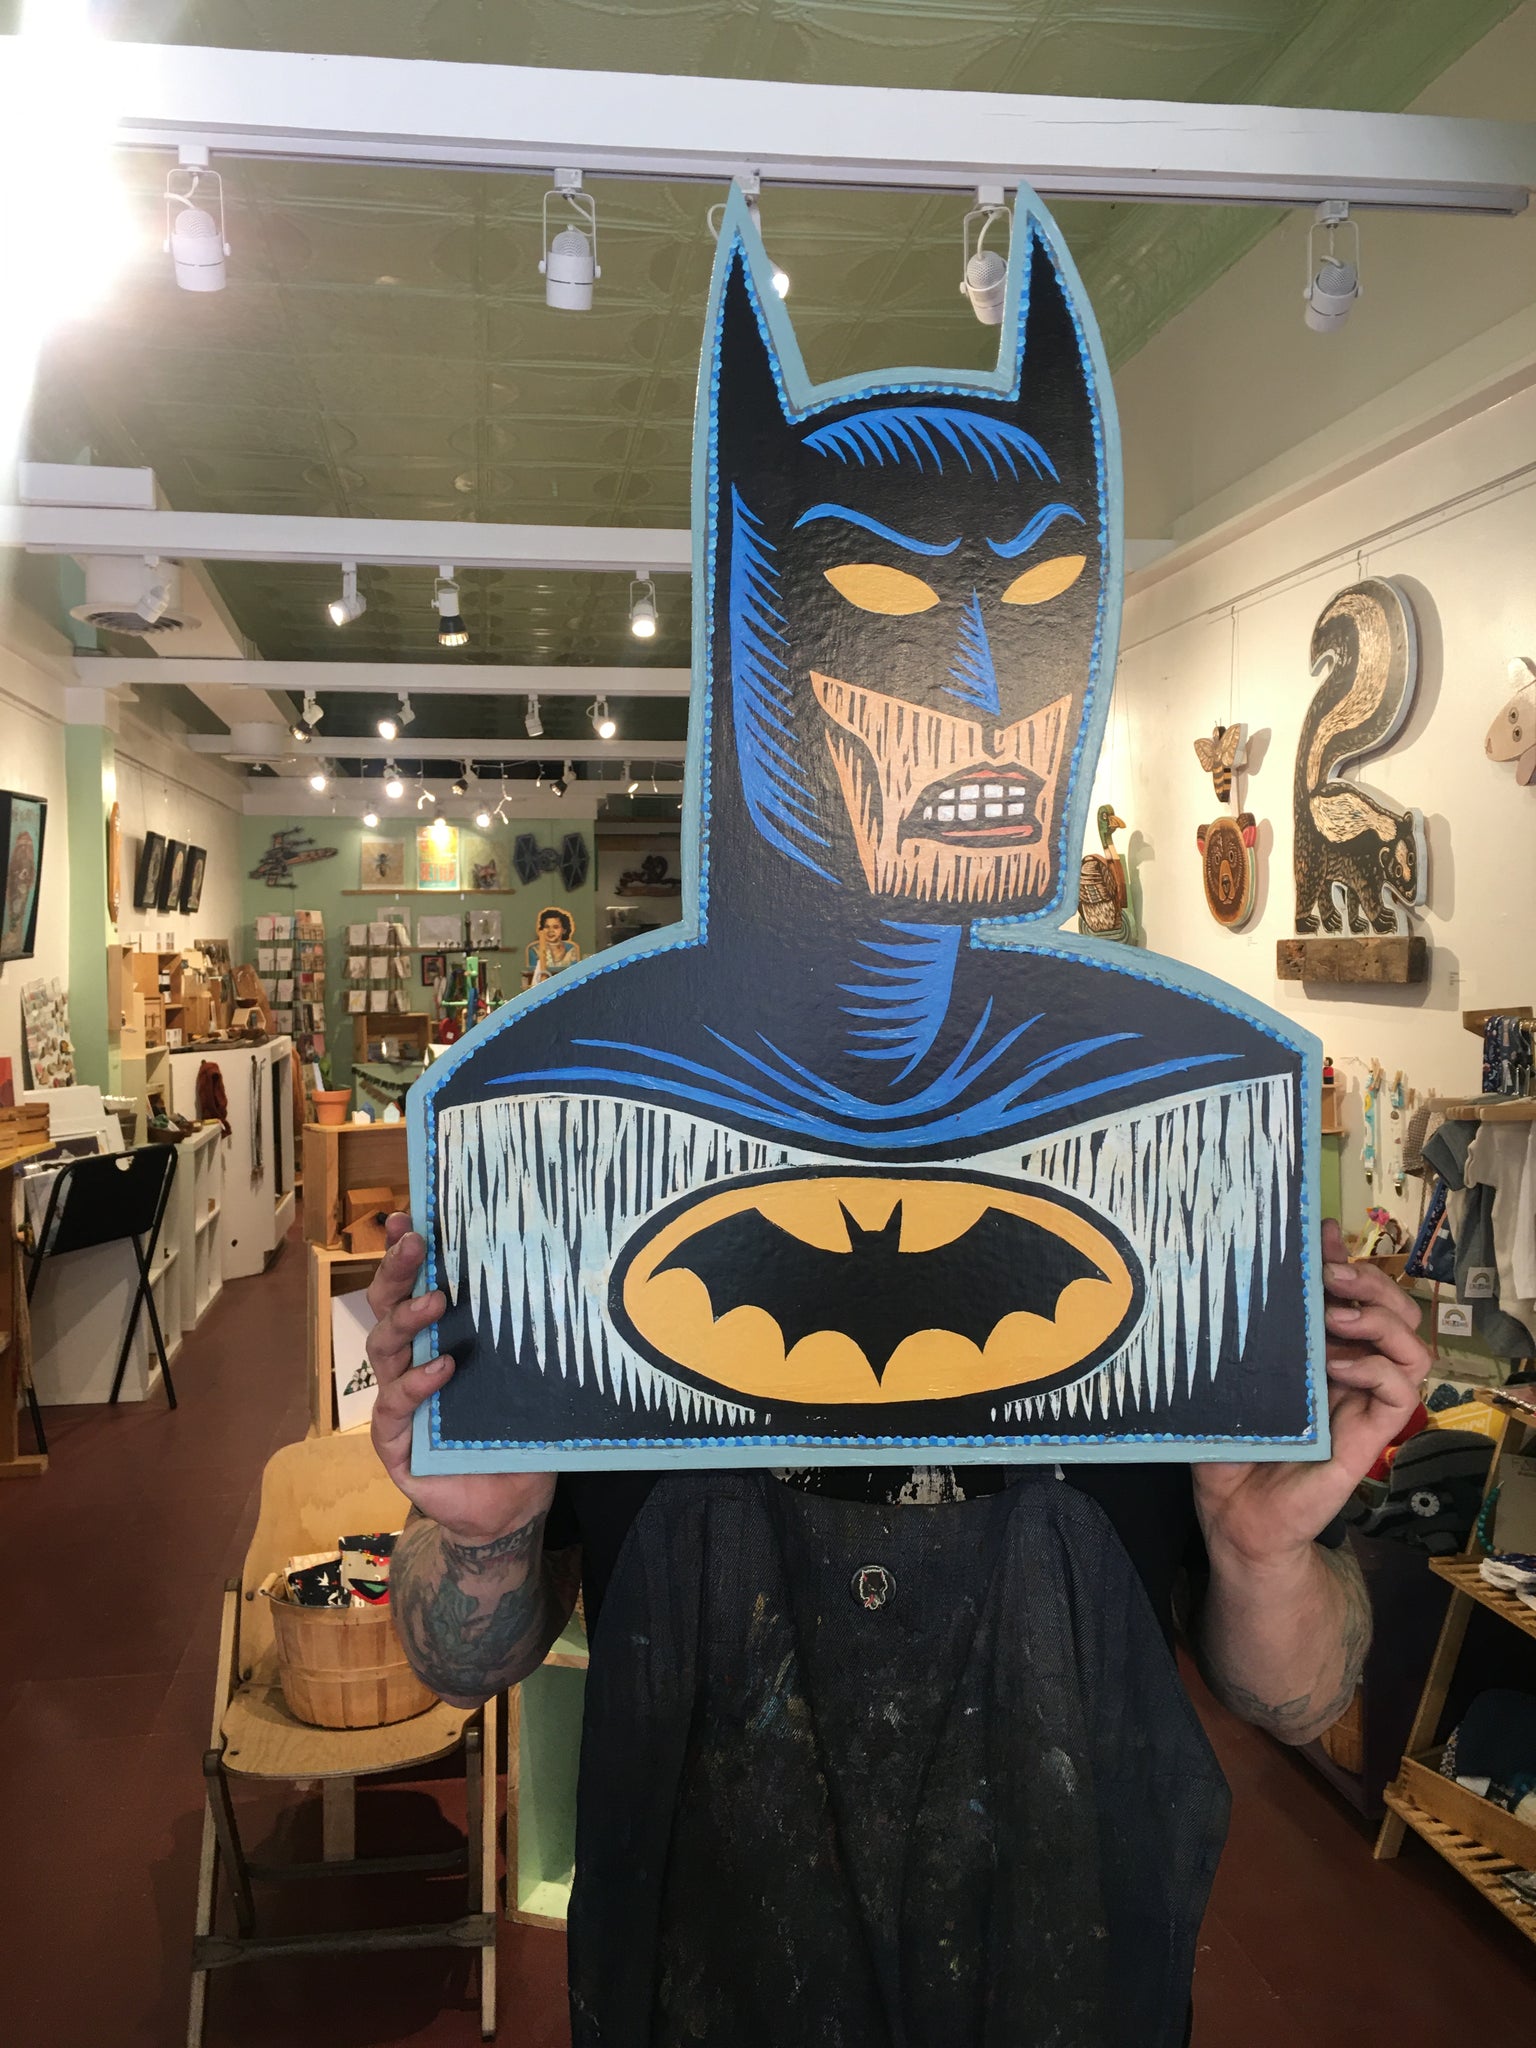 printable batman cutouts